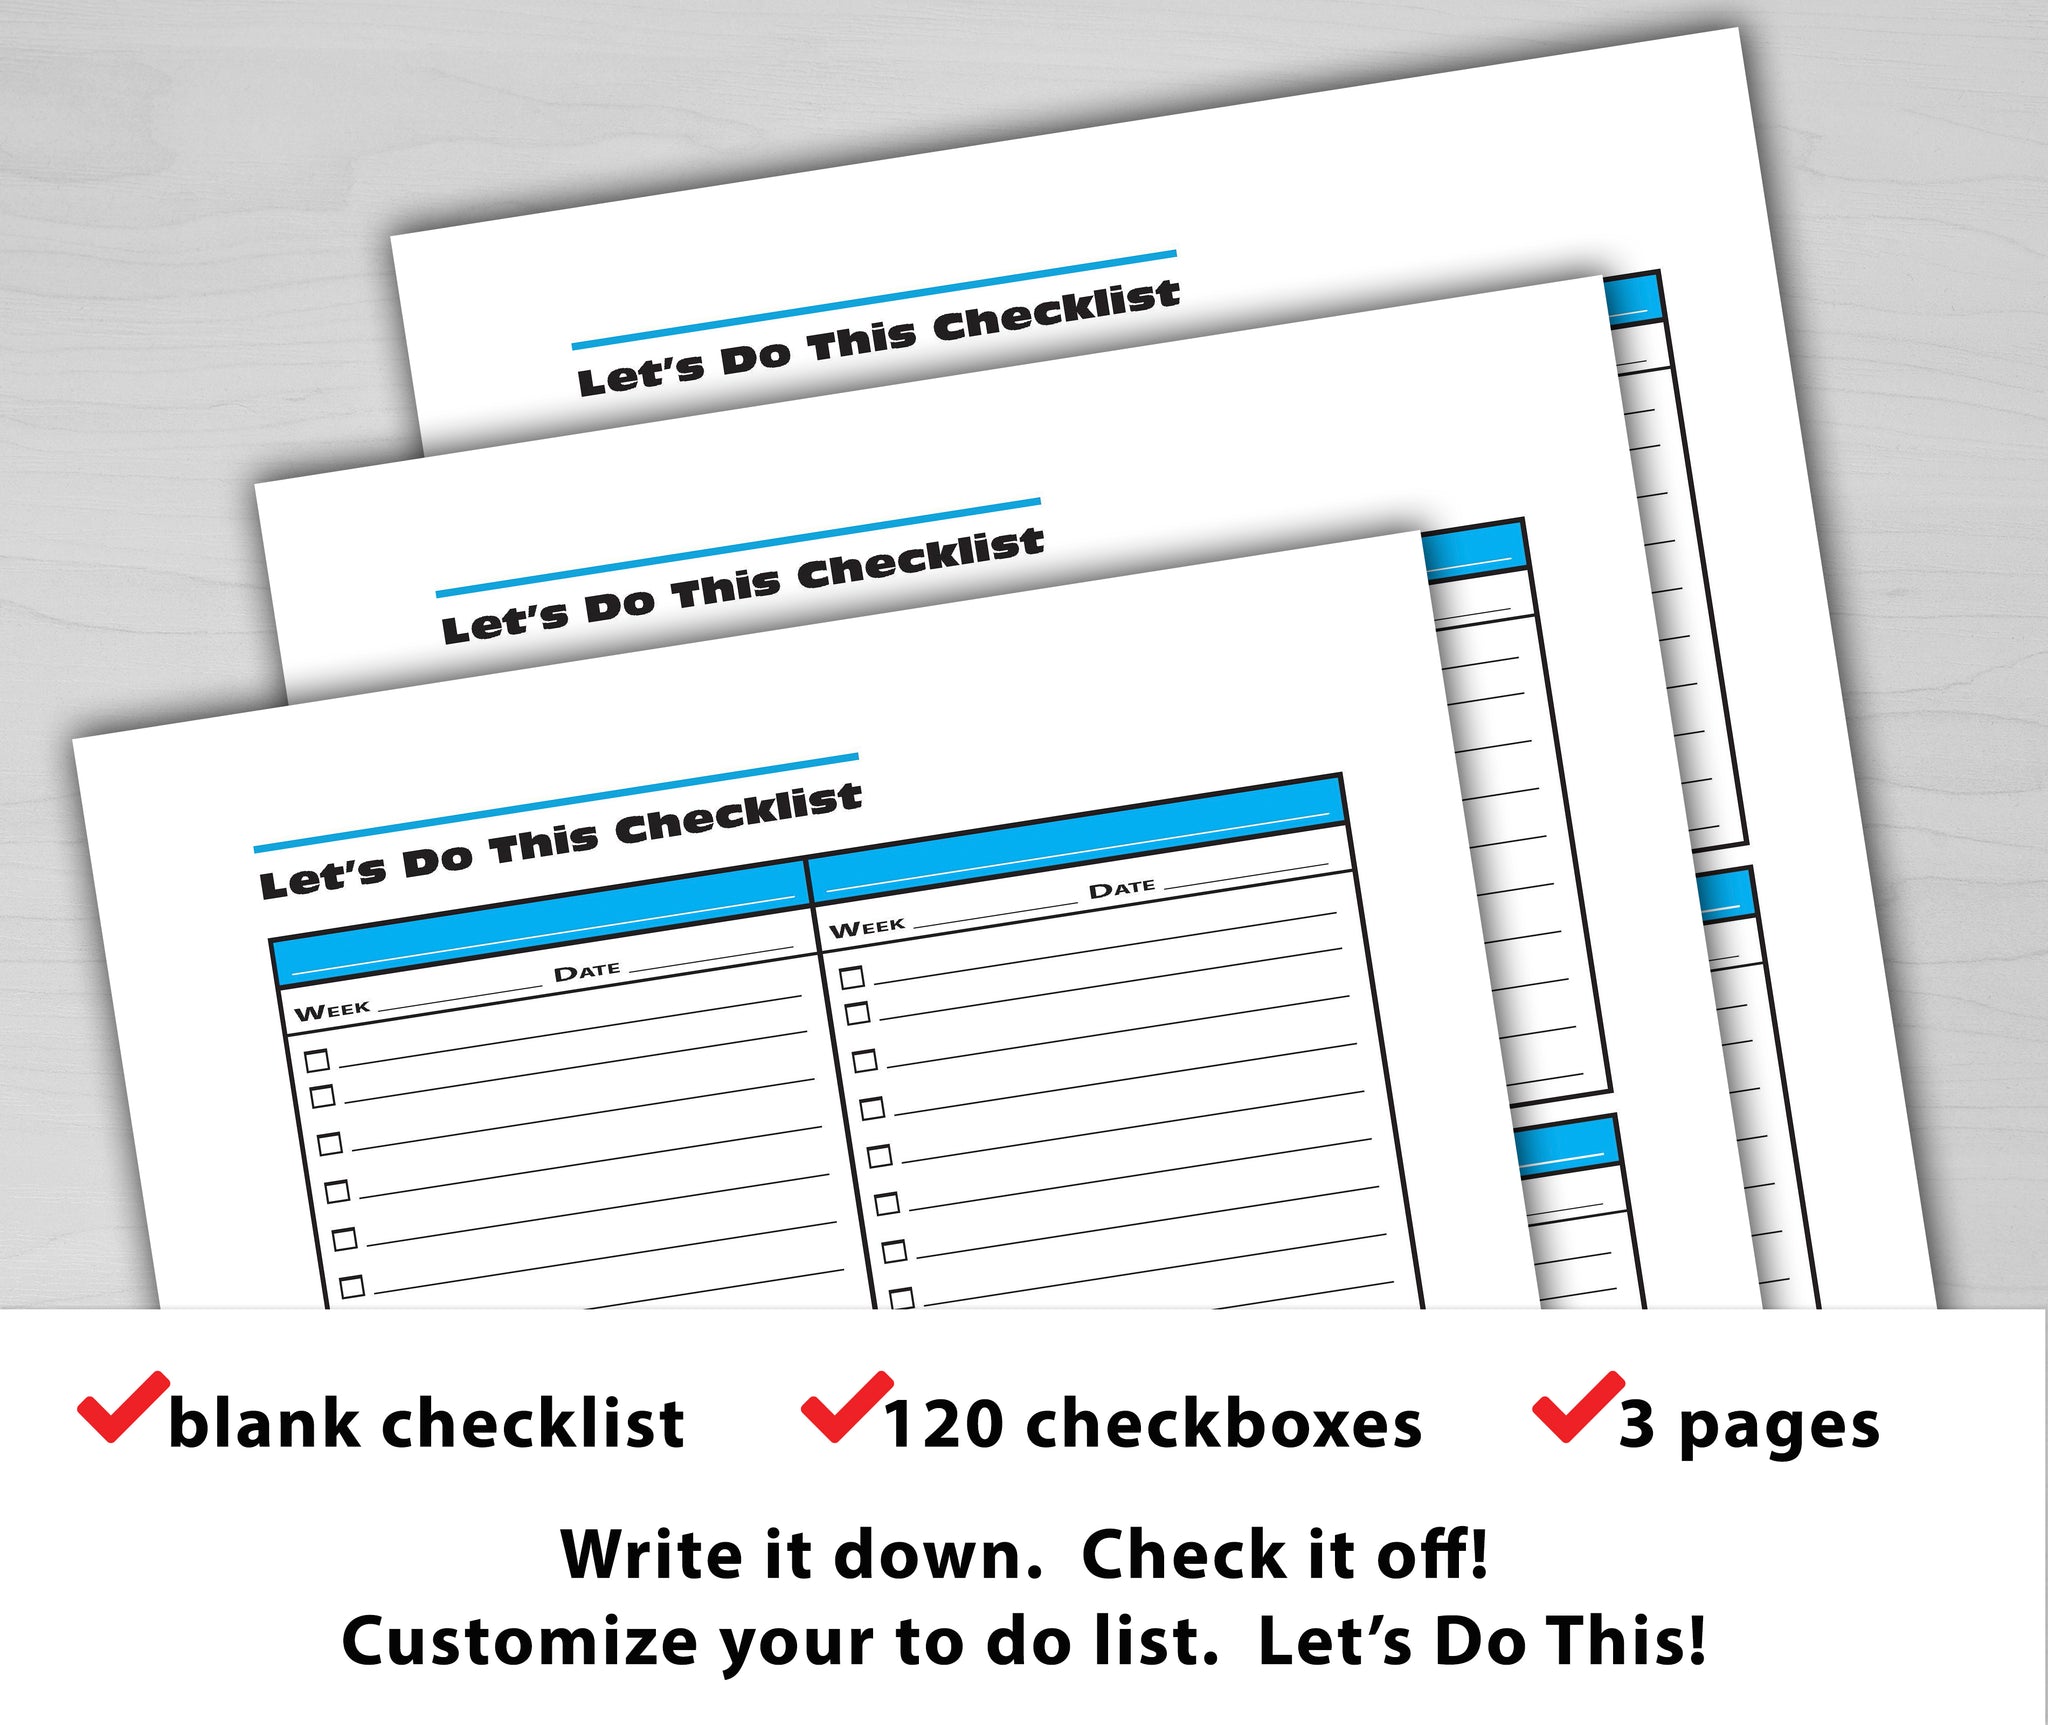 Let’s Do This Checklist (Blank Checklist)